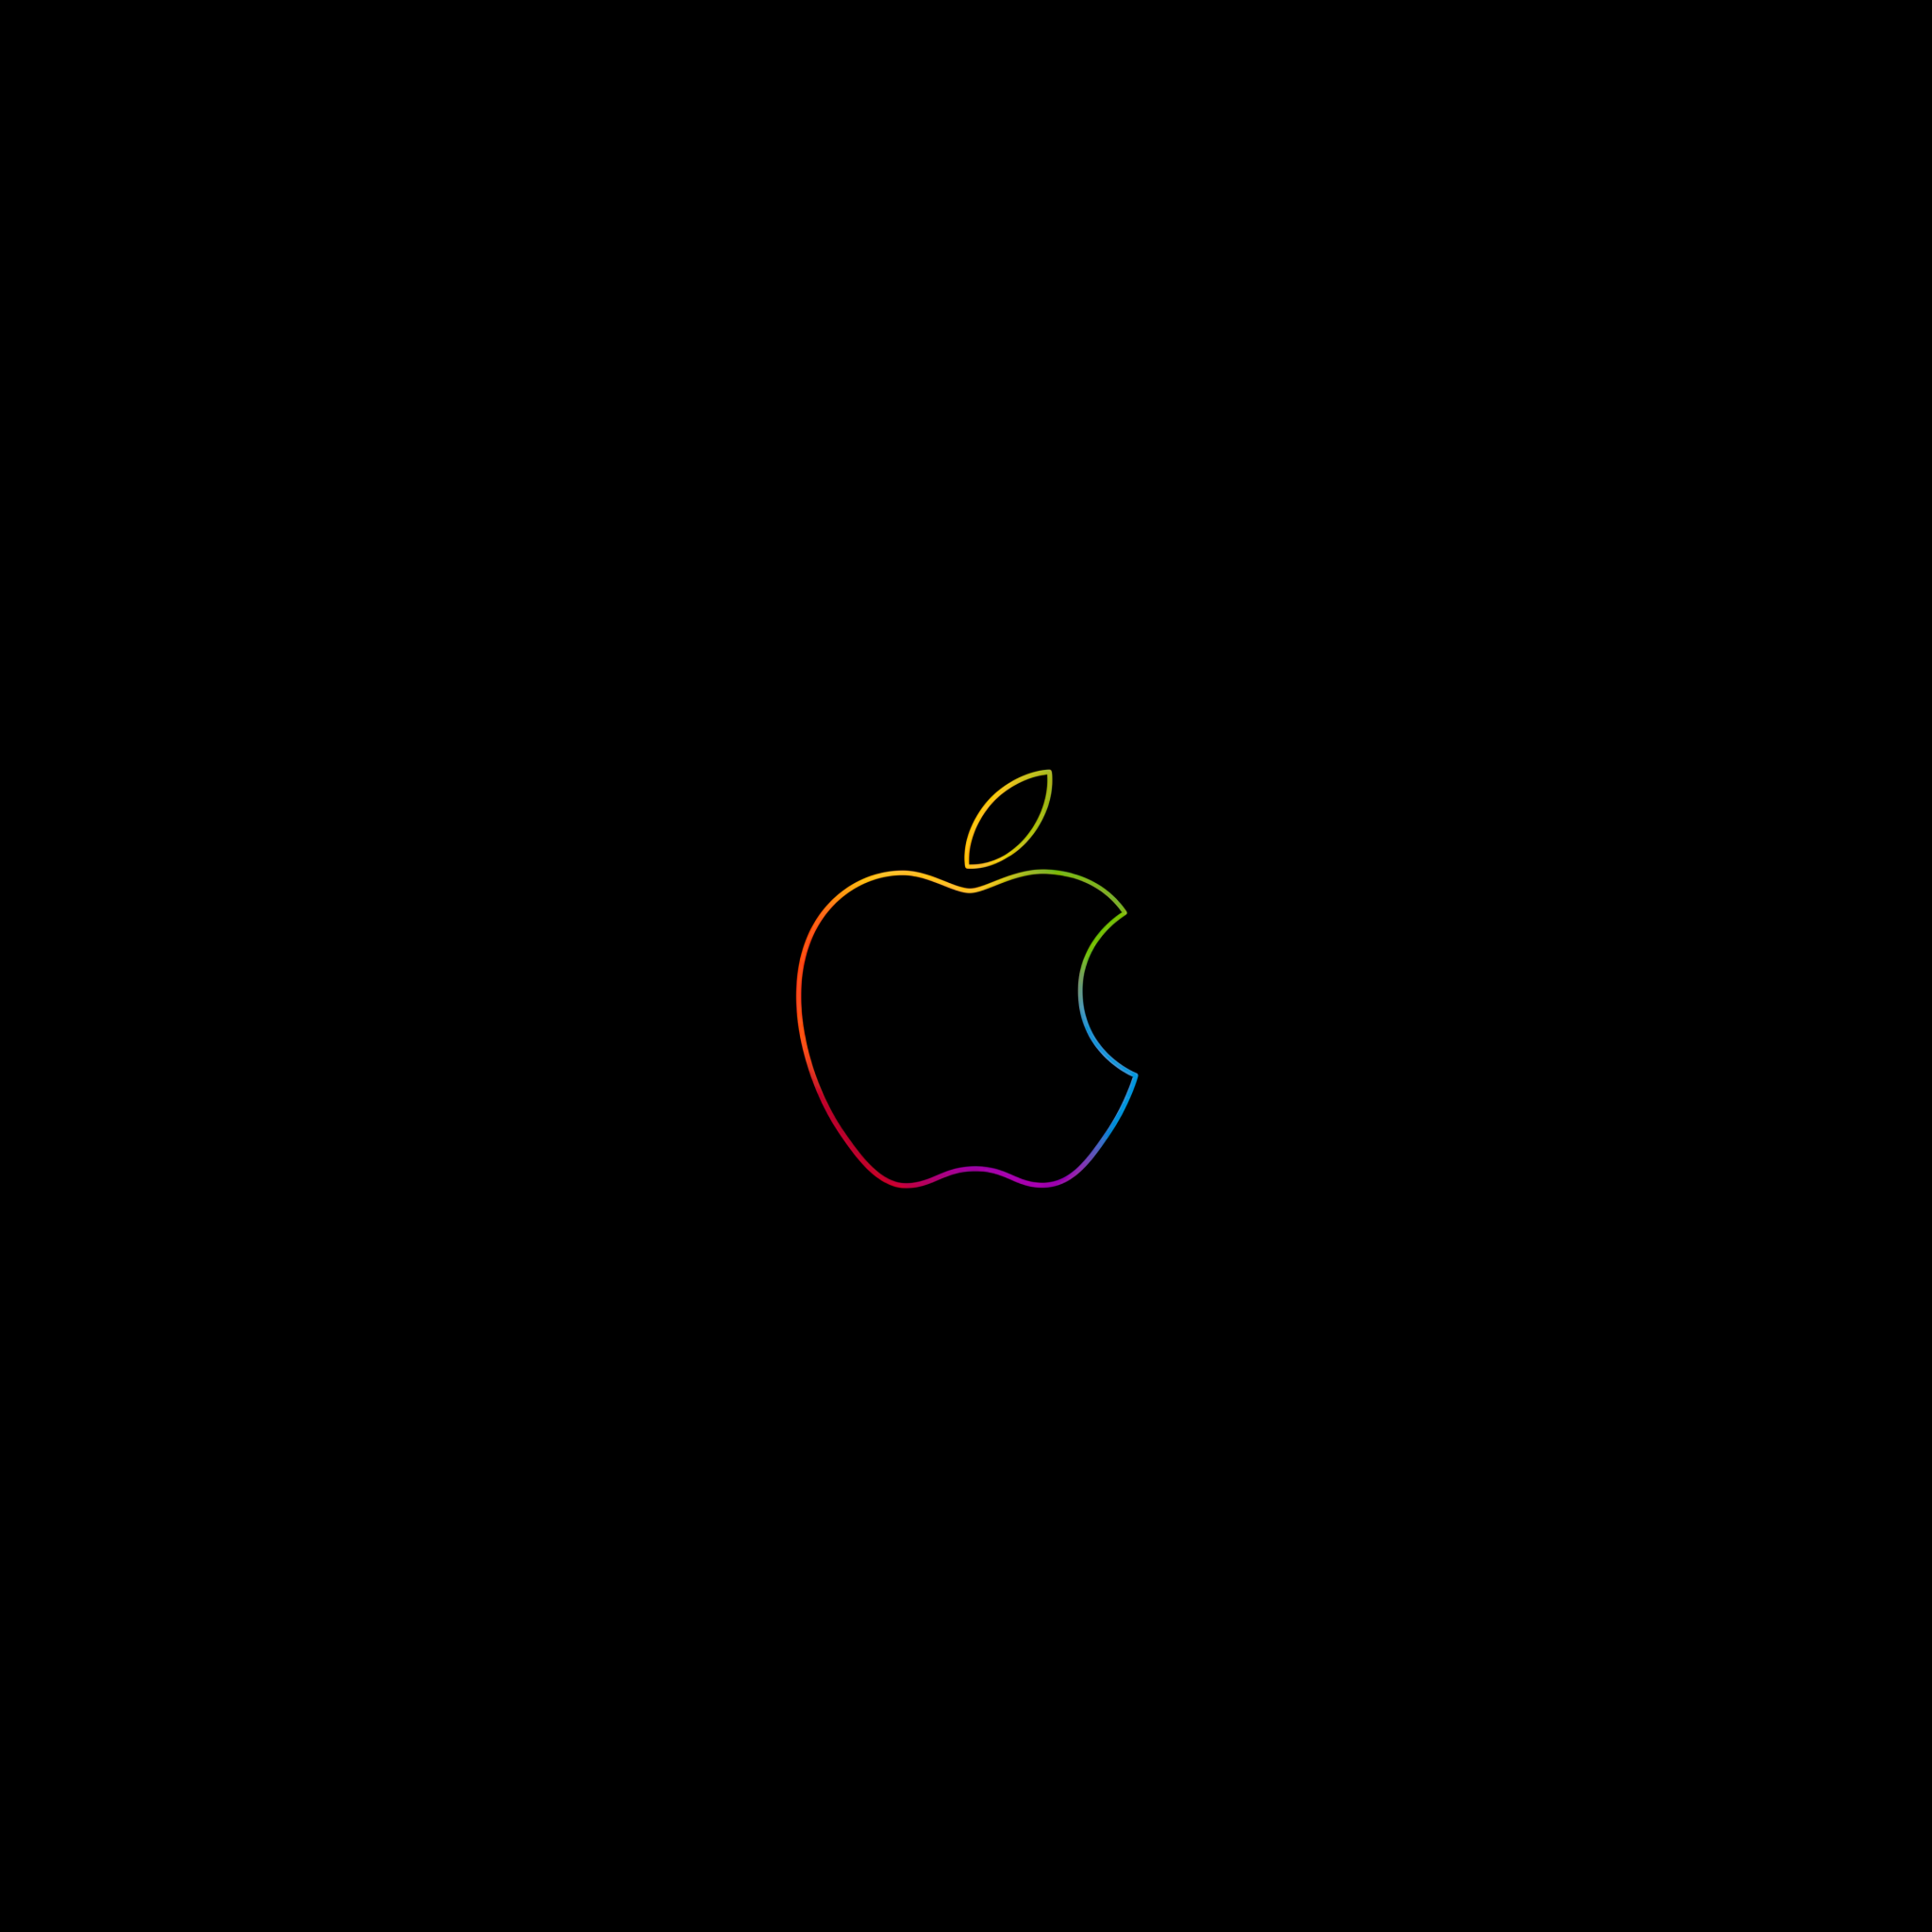 Apple Logo Wallpaper 4k Colorful Outline Black Background Ipad Hd Technology 7